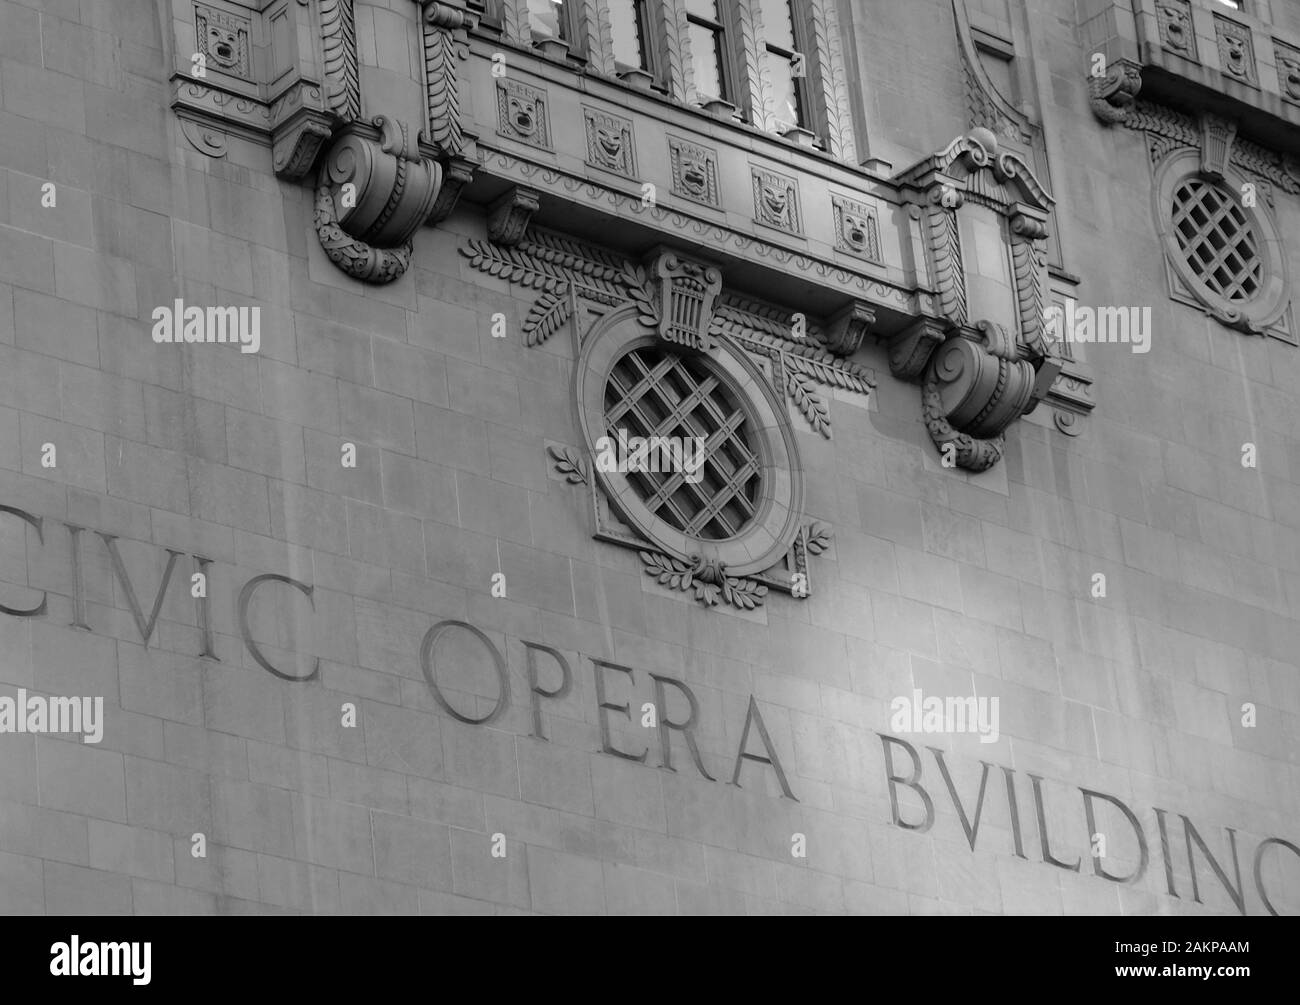 Civic Opera Building Stock Photo